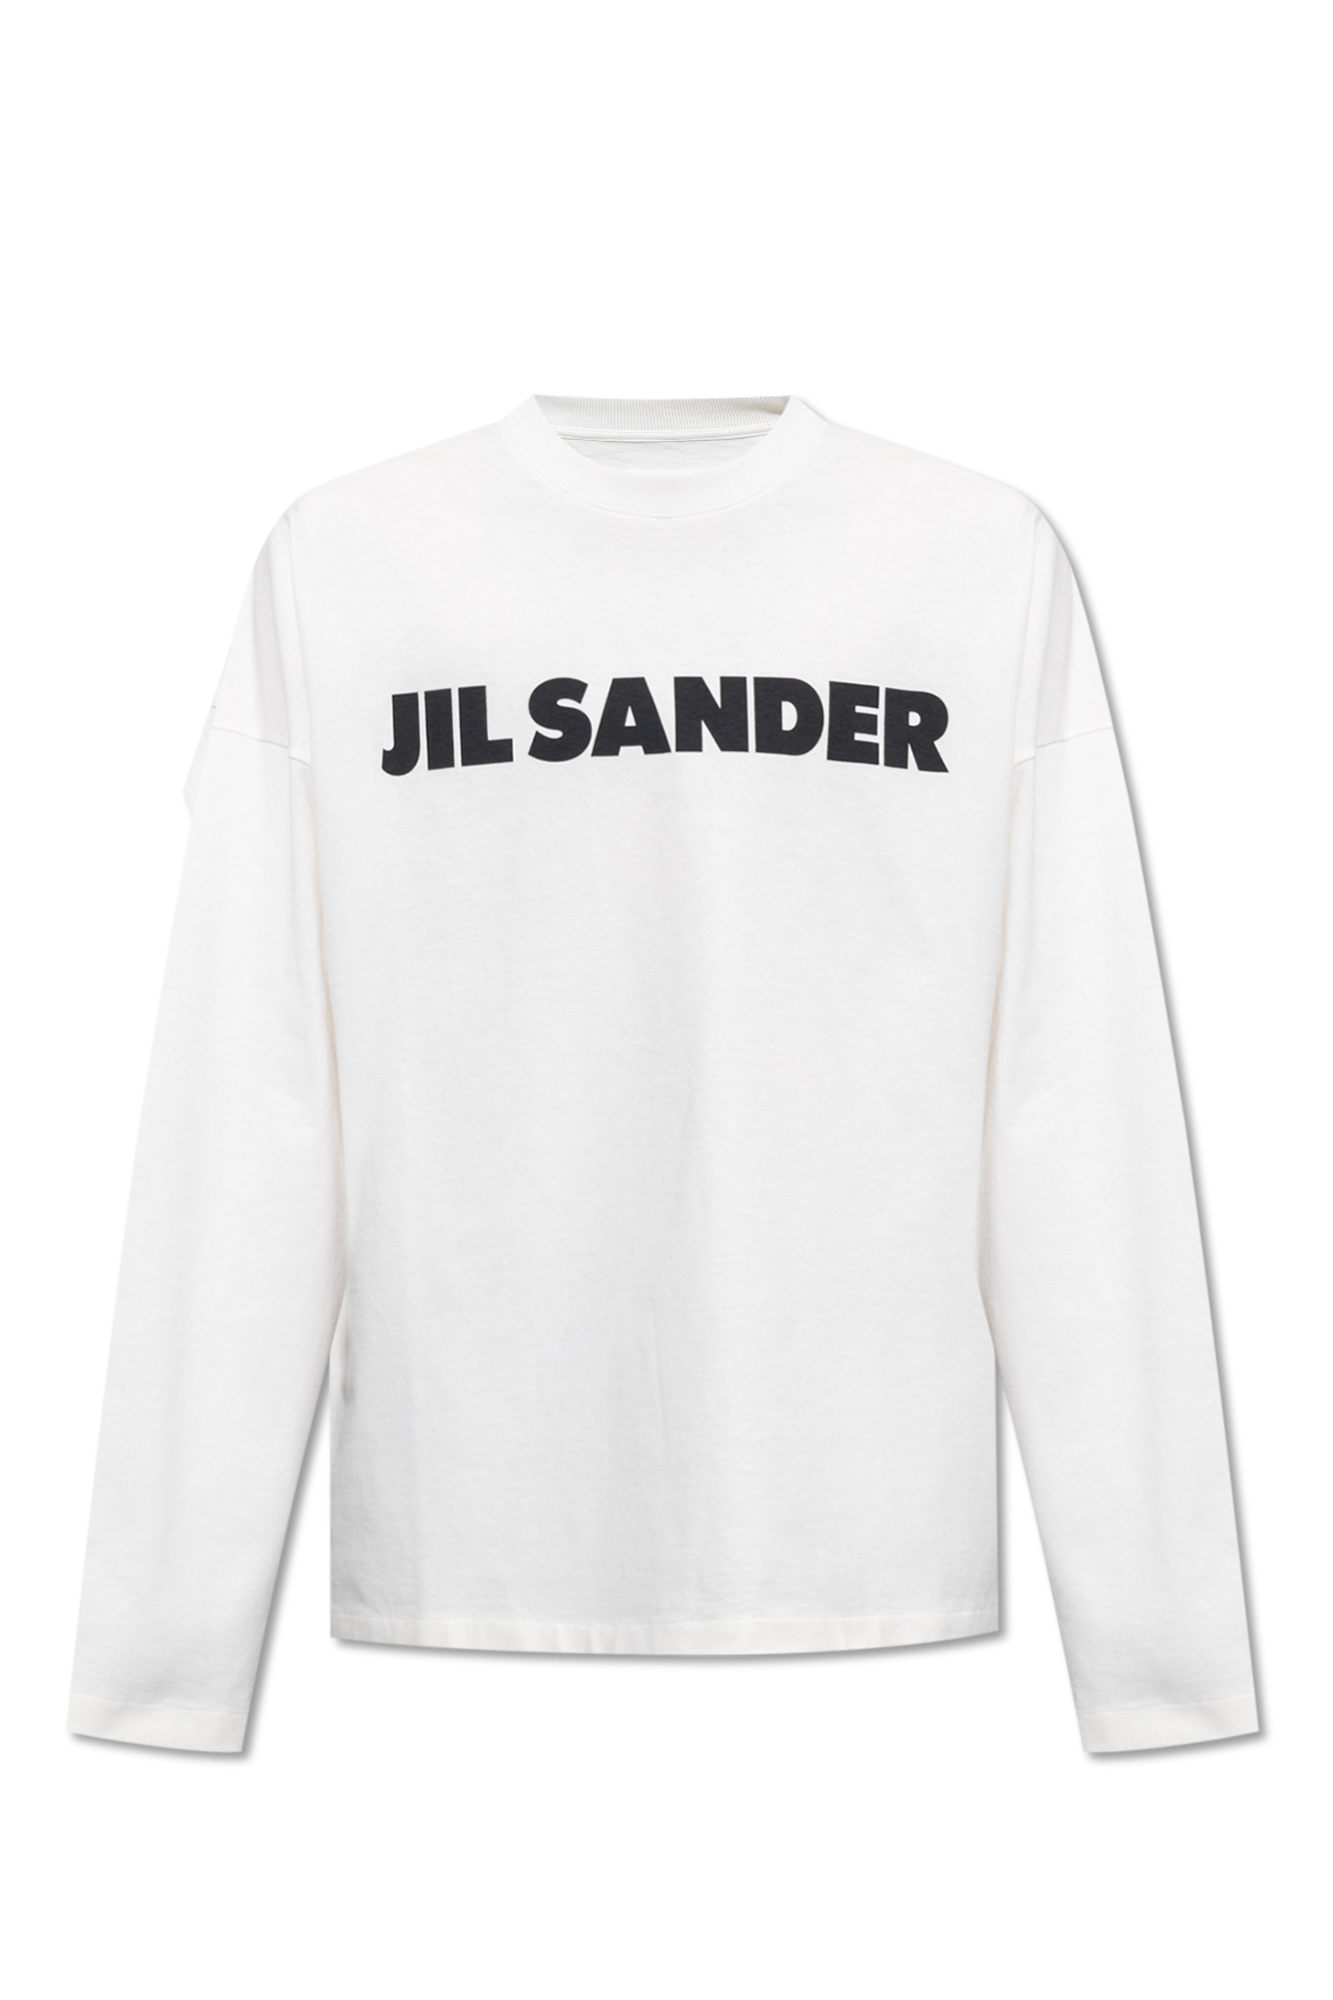 JIL SANDER Jil Sander Bootcut Jeans for Women